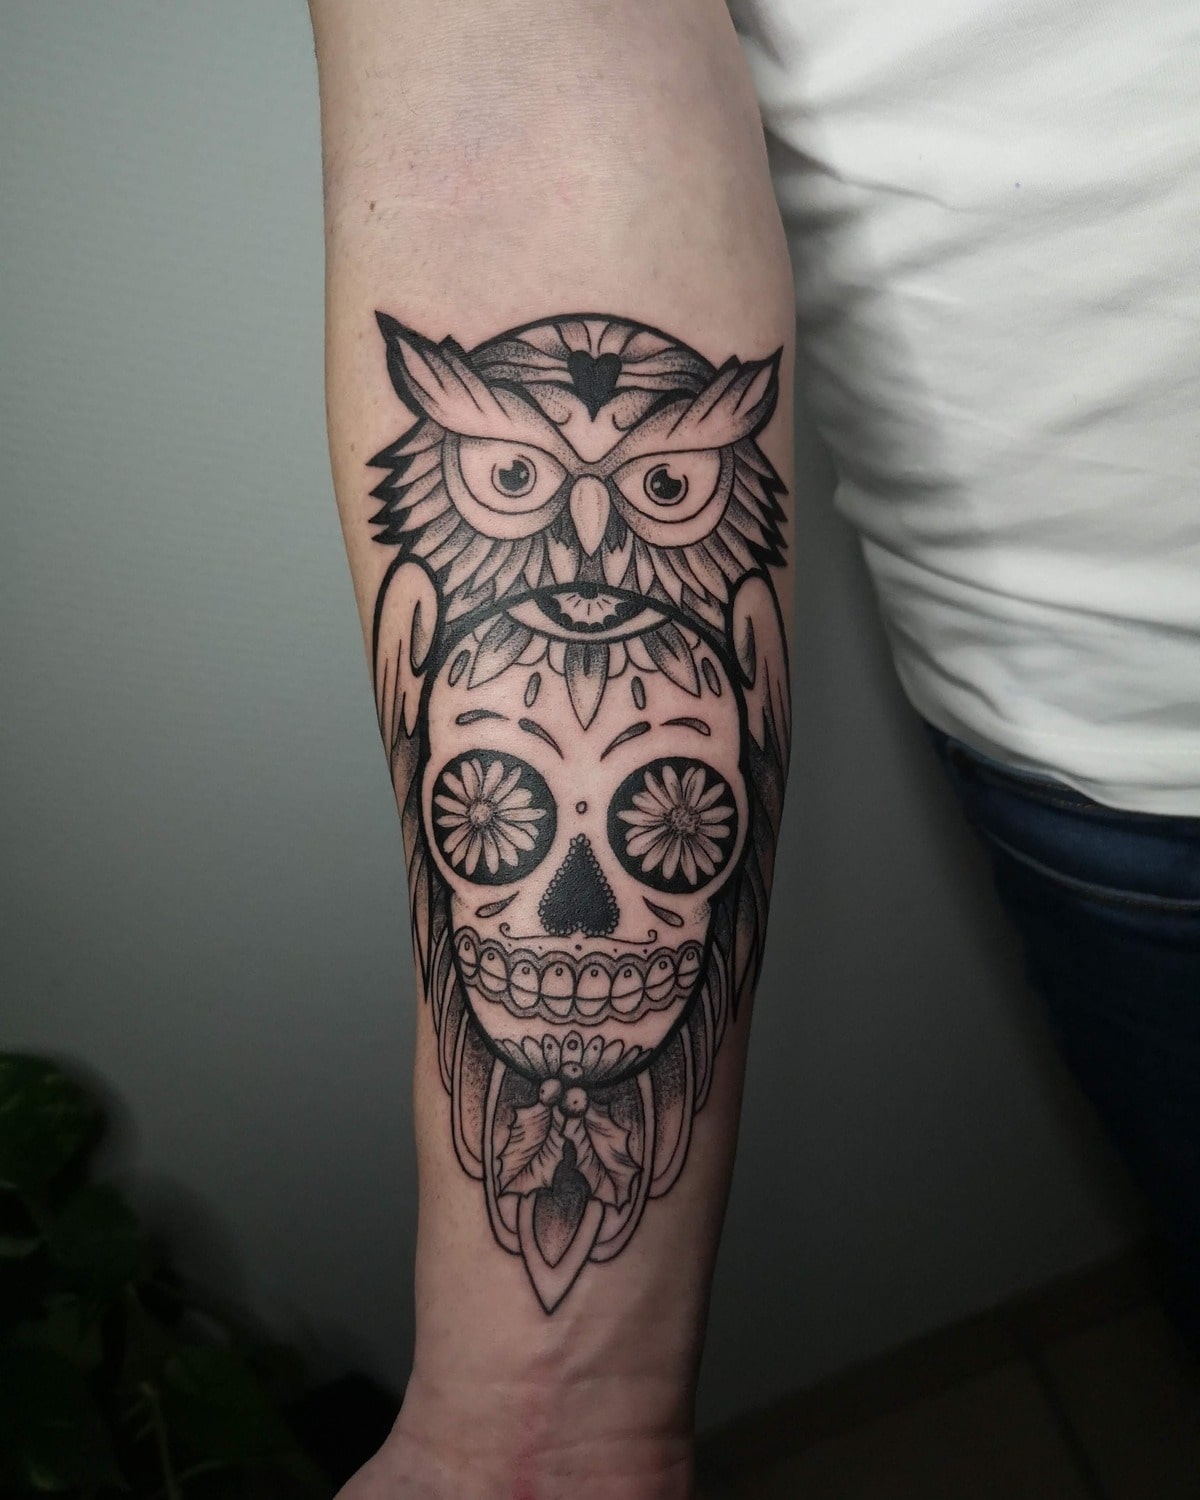 Calavera i tatuaż sowy